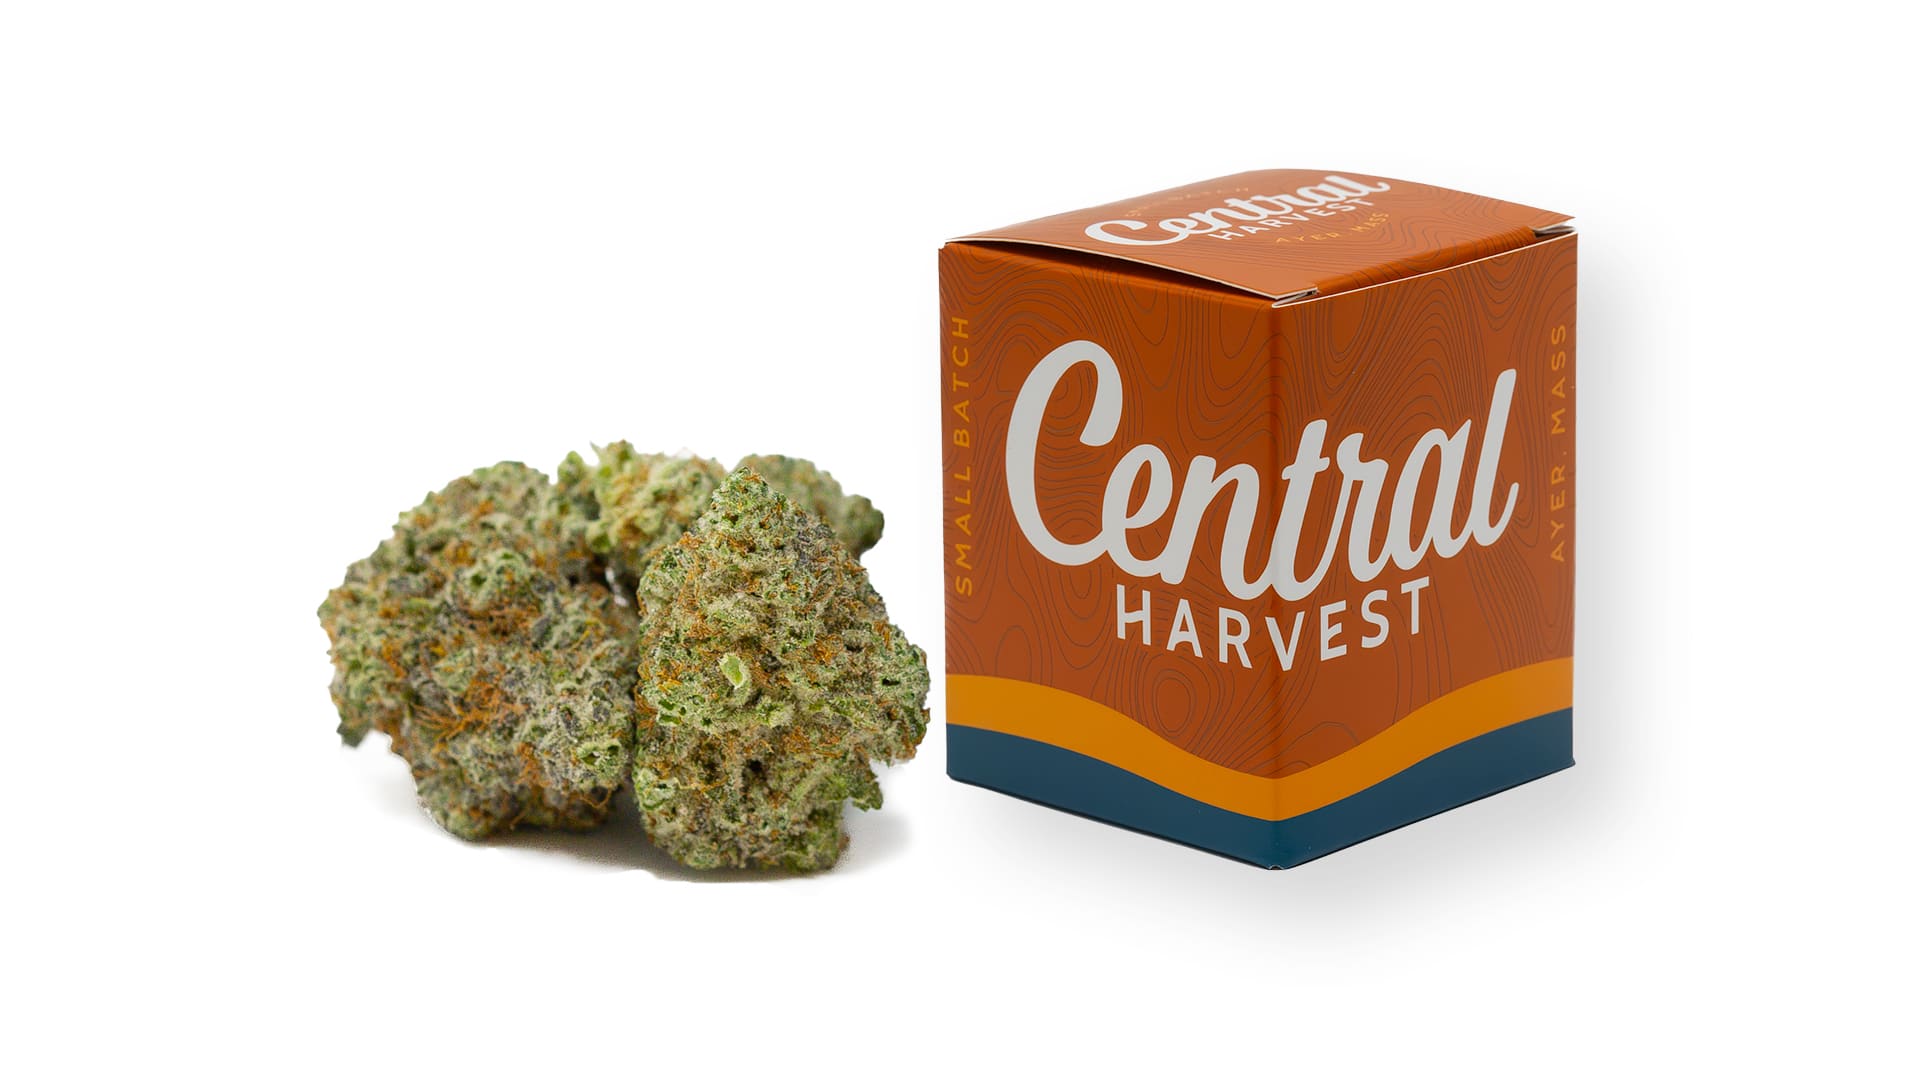 Don Carlos is a Hybrid Cannabis strain grown by Central Harvest